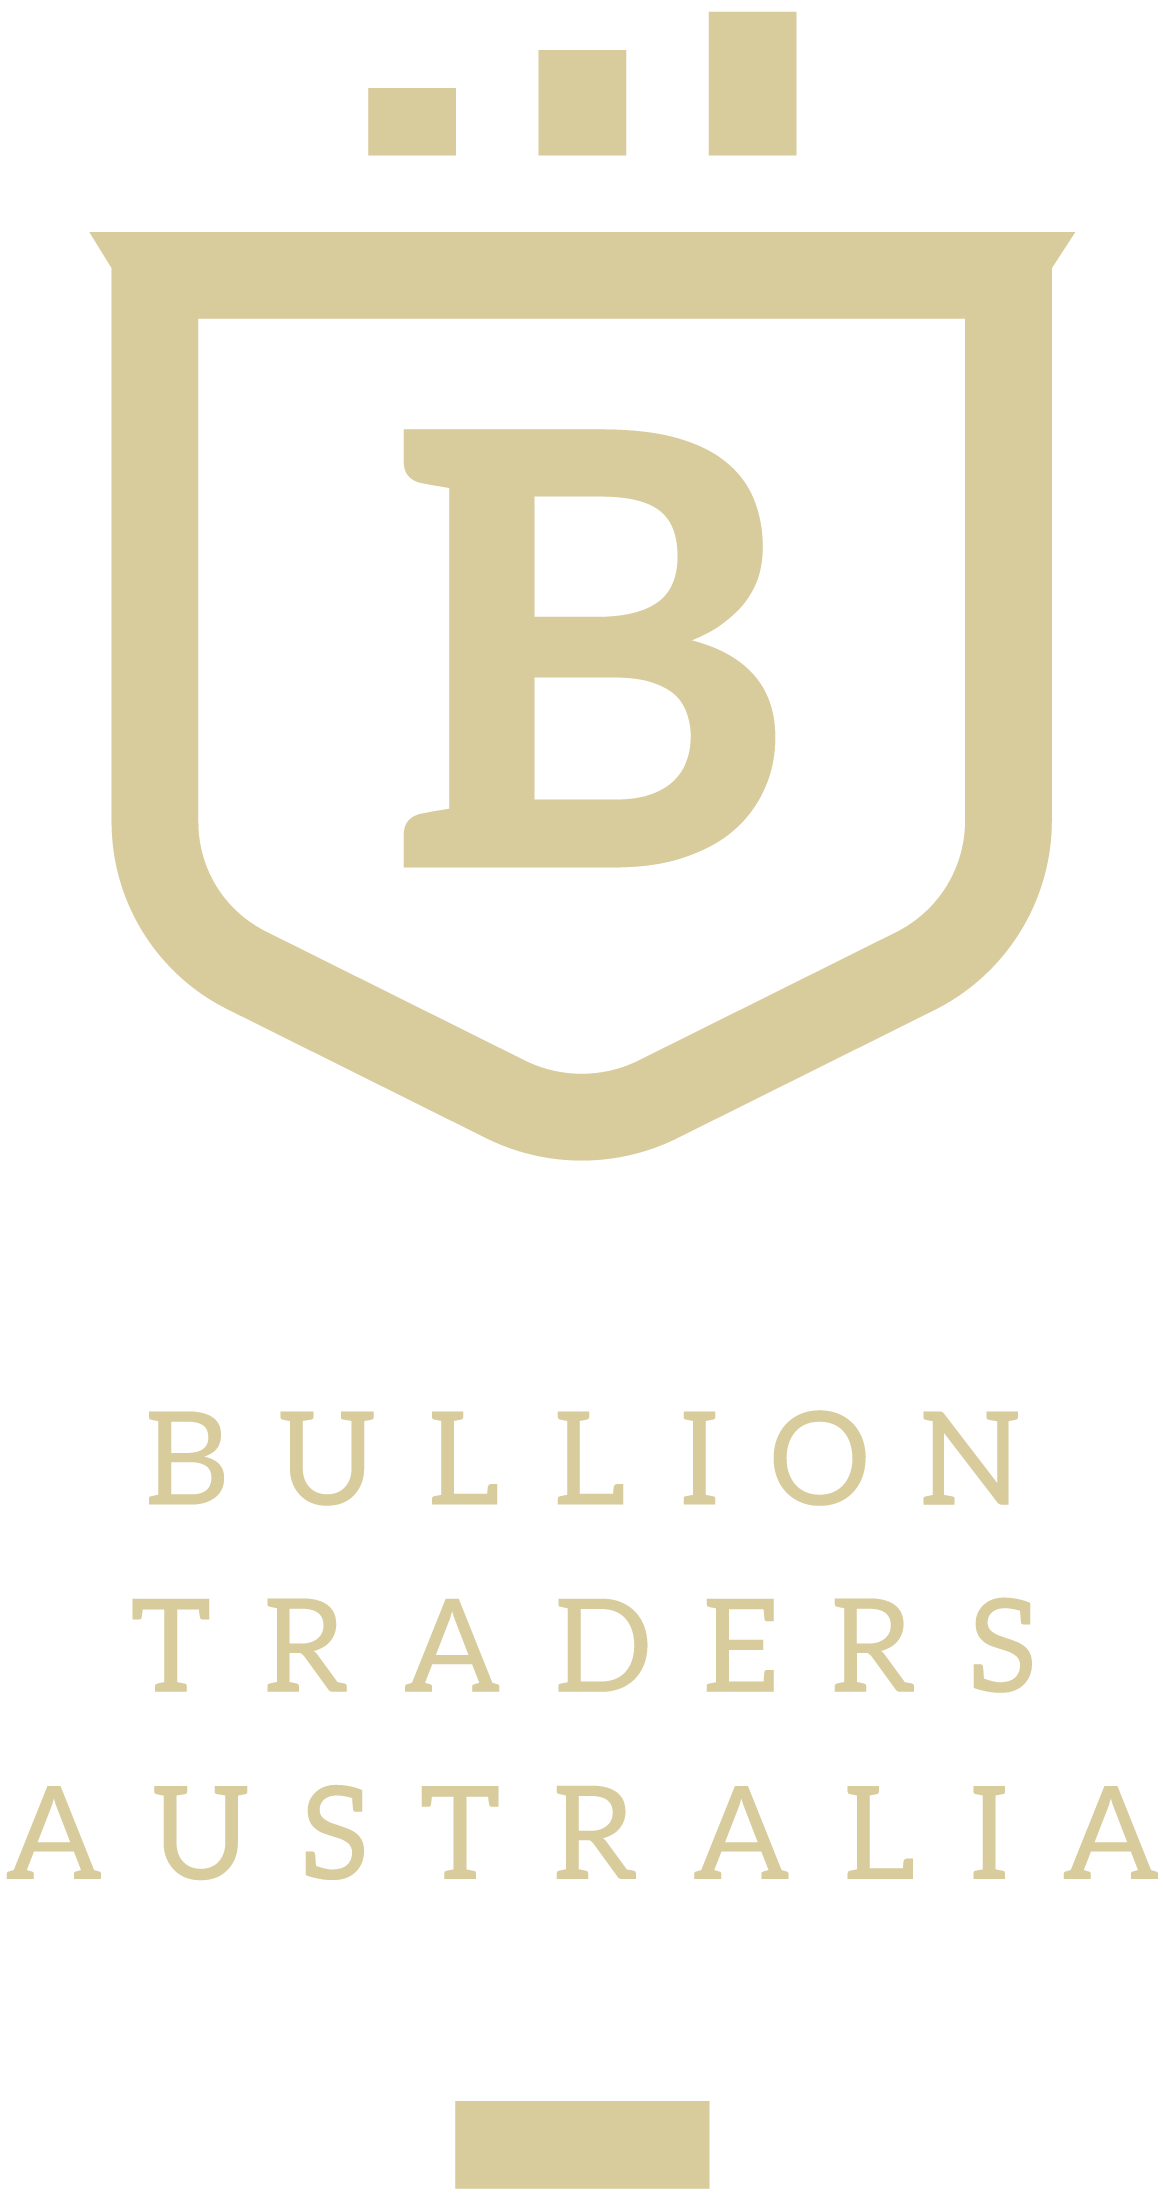 Bullion Traders Australia